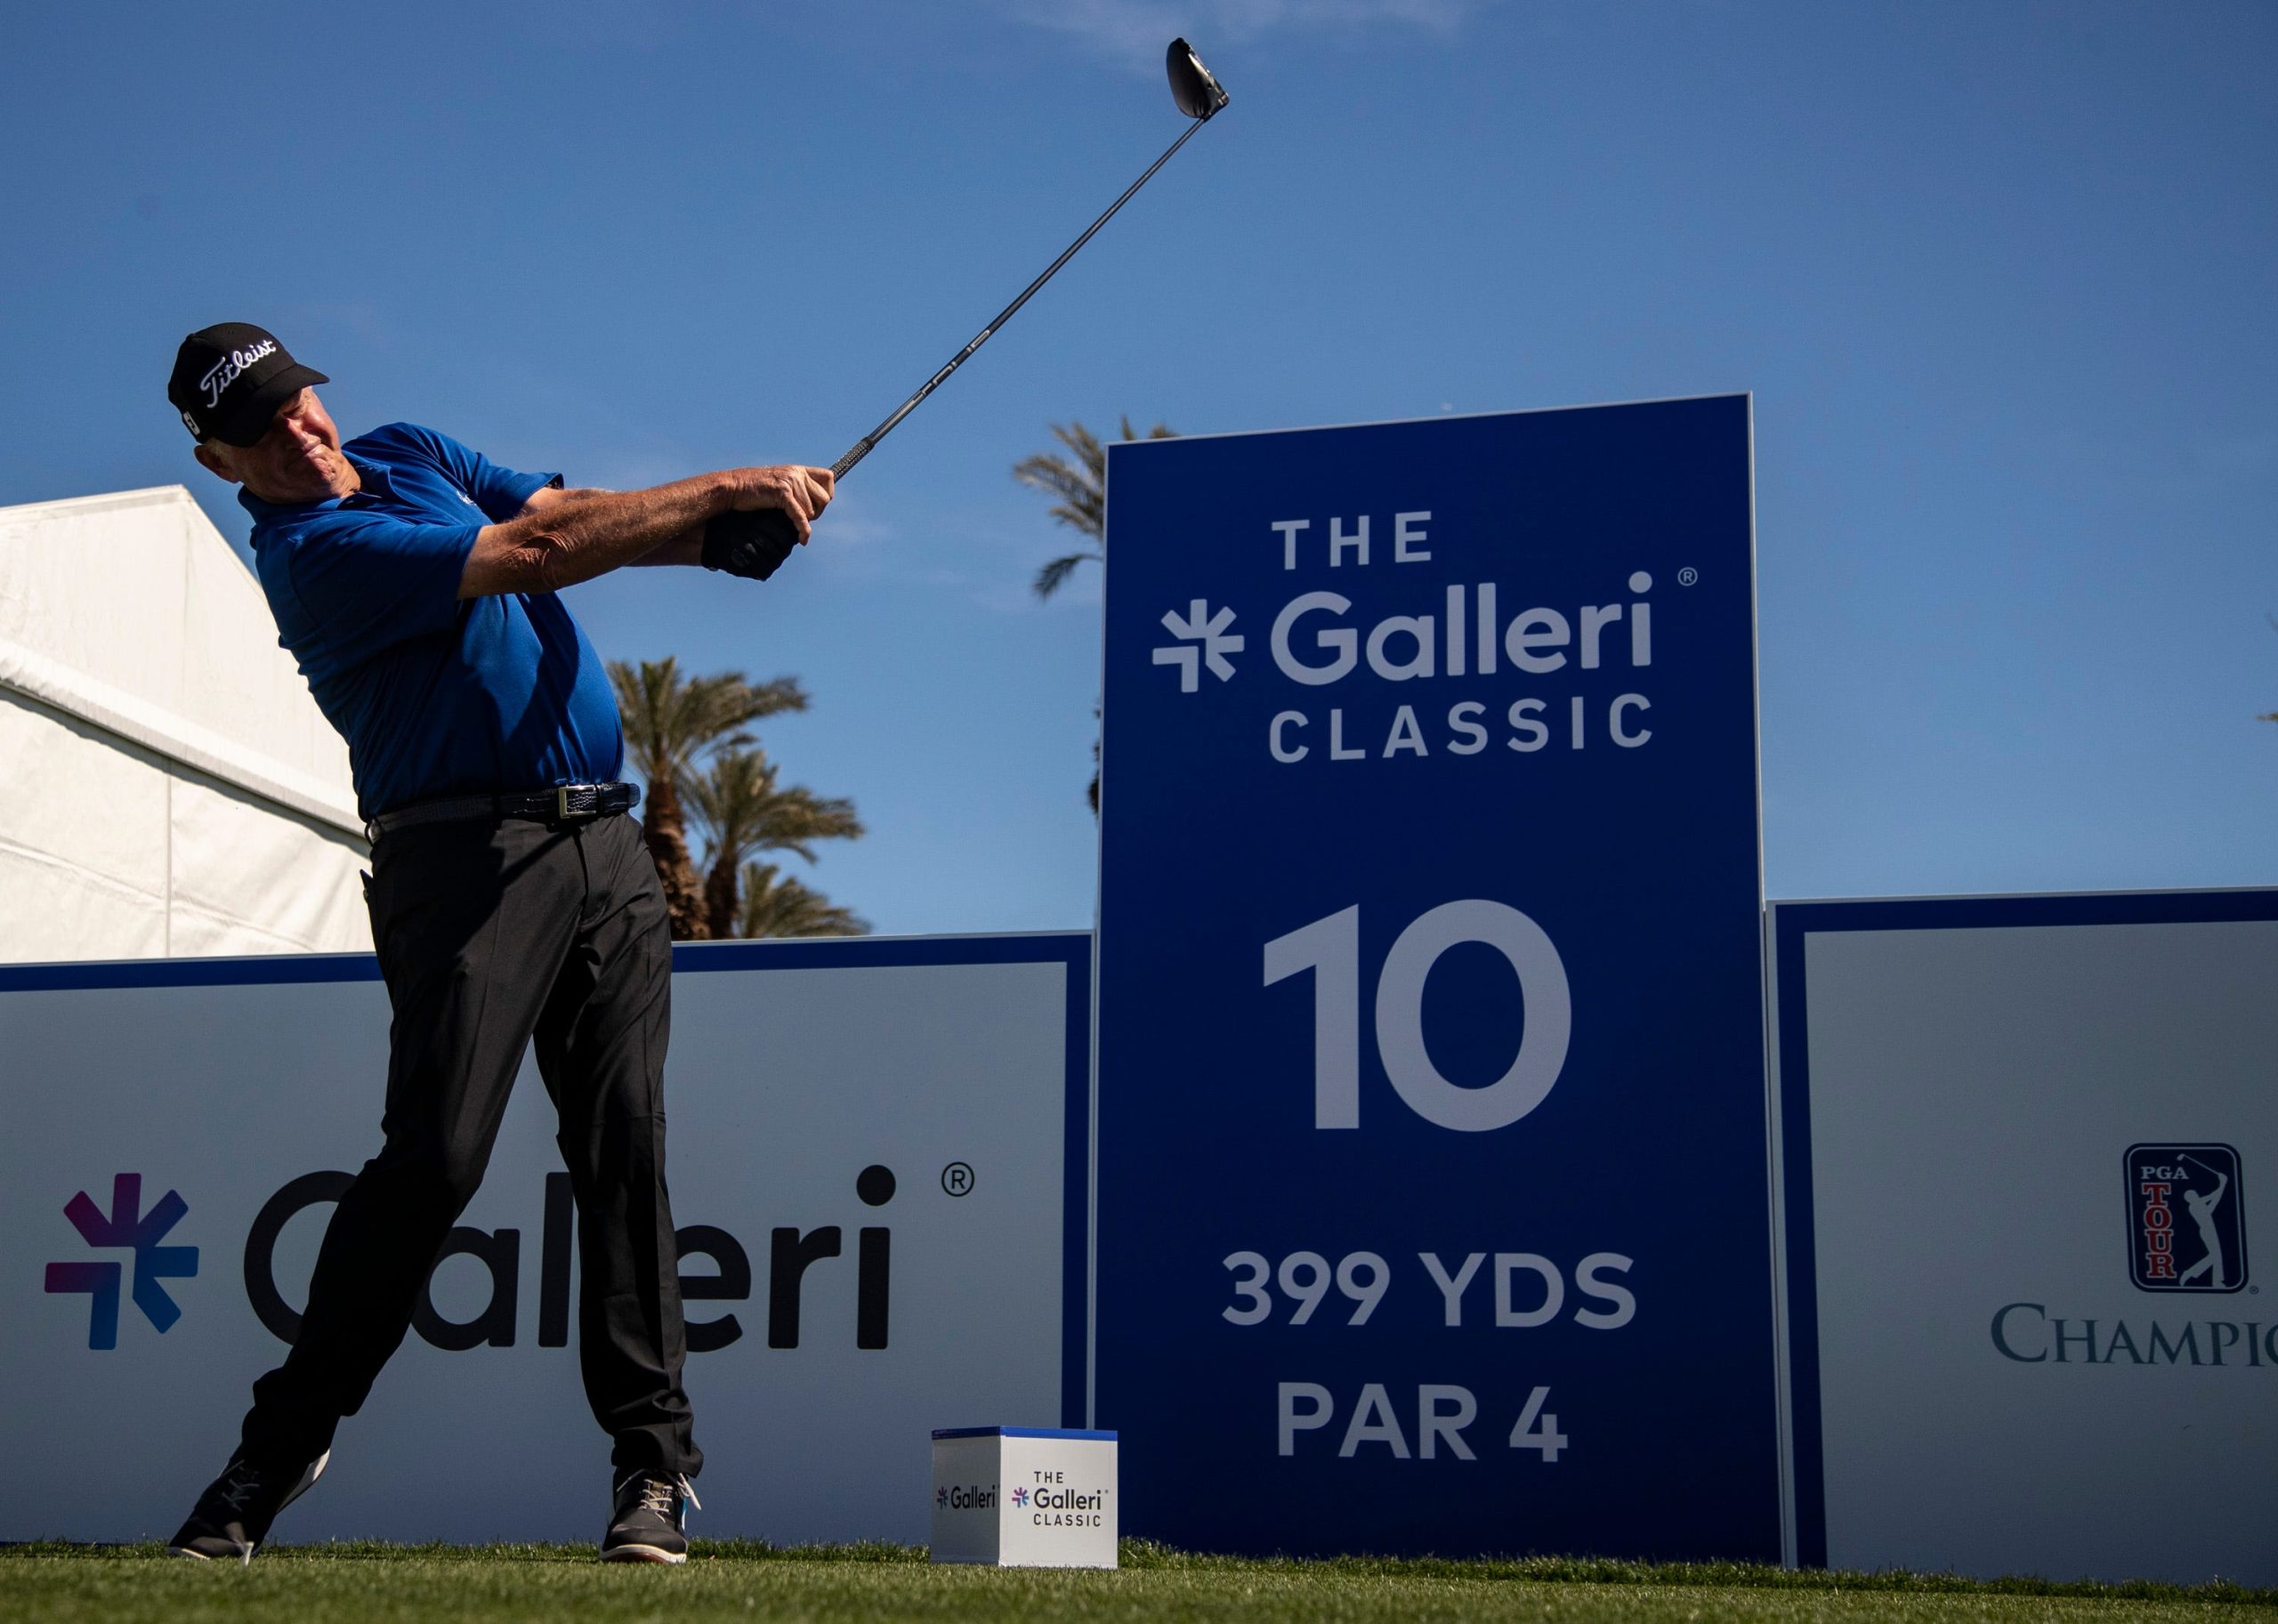 Ryder Cup star Sandy Lyle, desert legend John Cook end golf careers at Galleri Classic